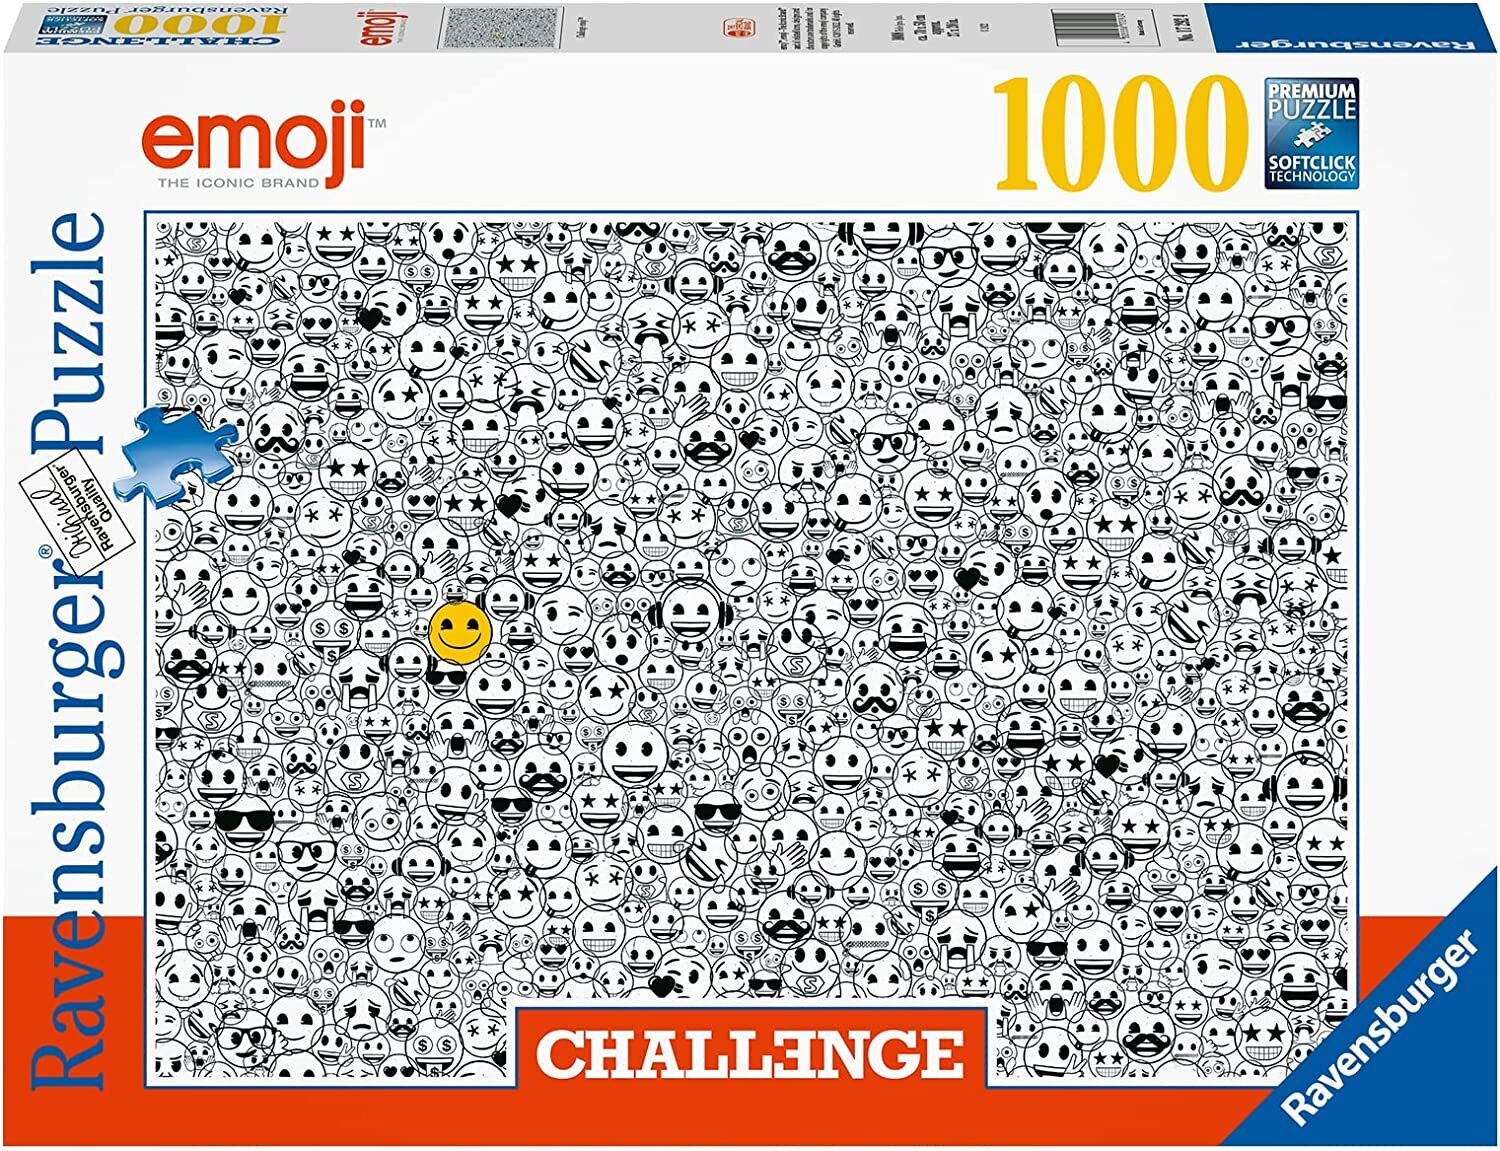 Ravensburger Glitter Challenge 1000 Piece Puzzle